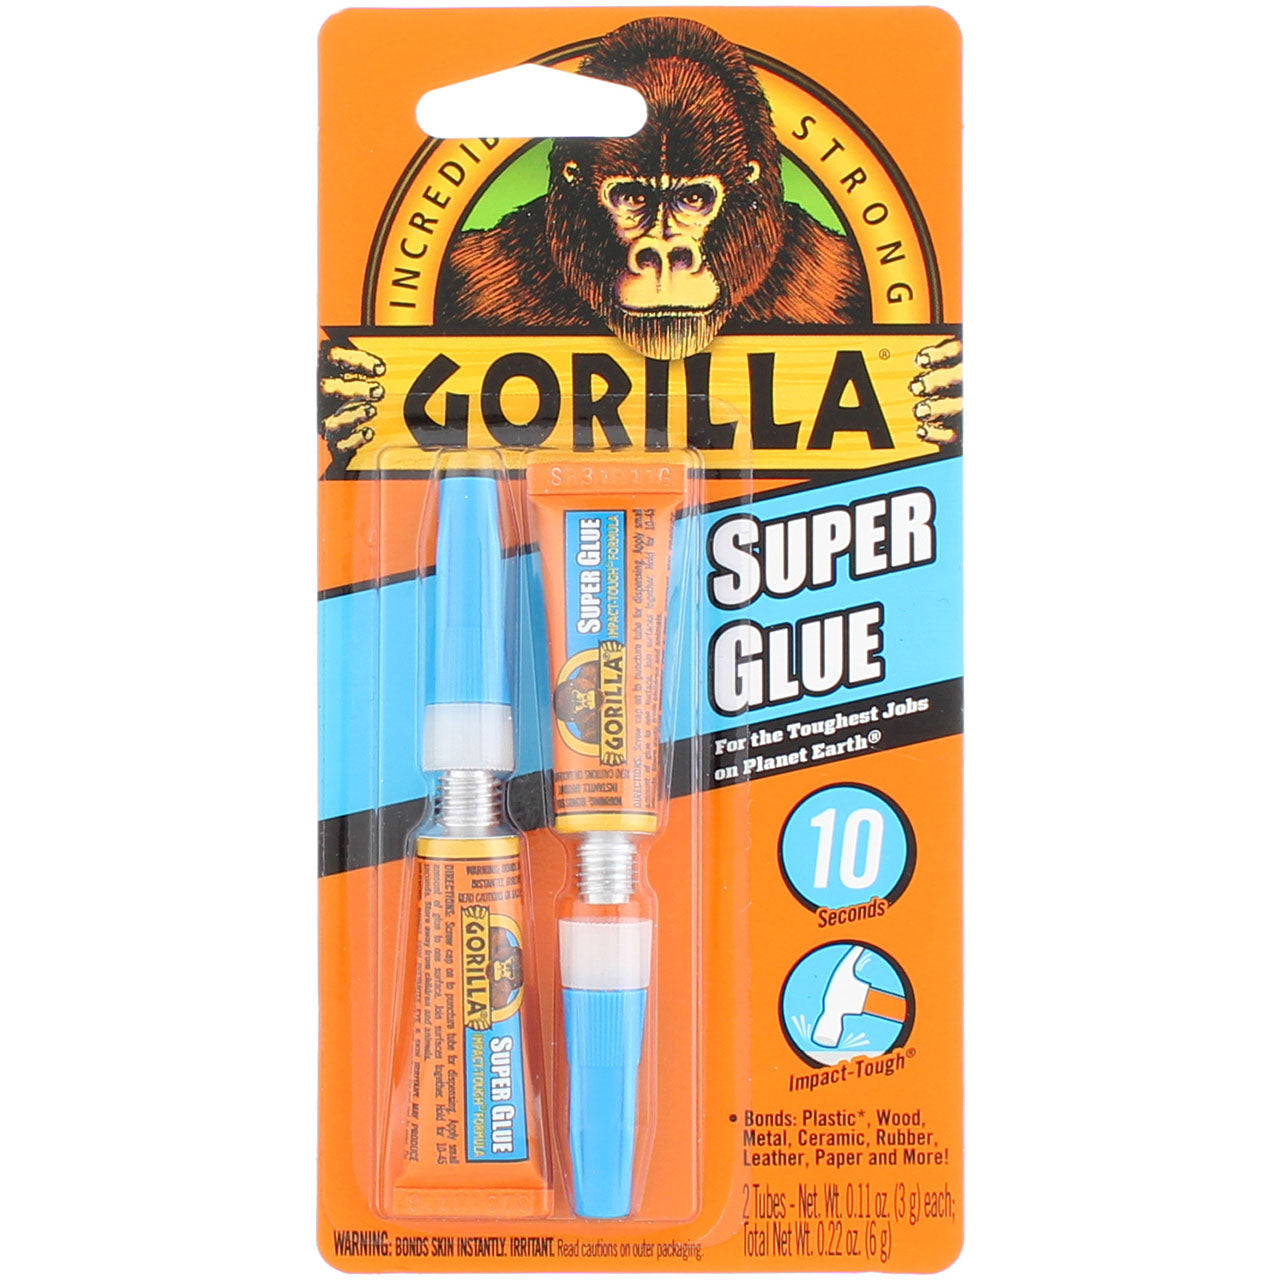 Krazy Glue Super Glue All Purpose Precision Tip 2 ct 0.07 oz